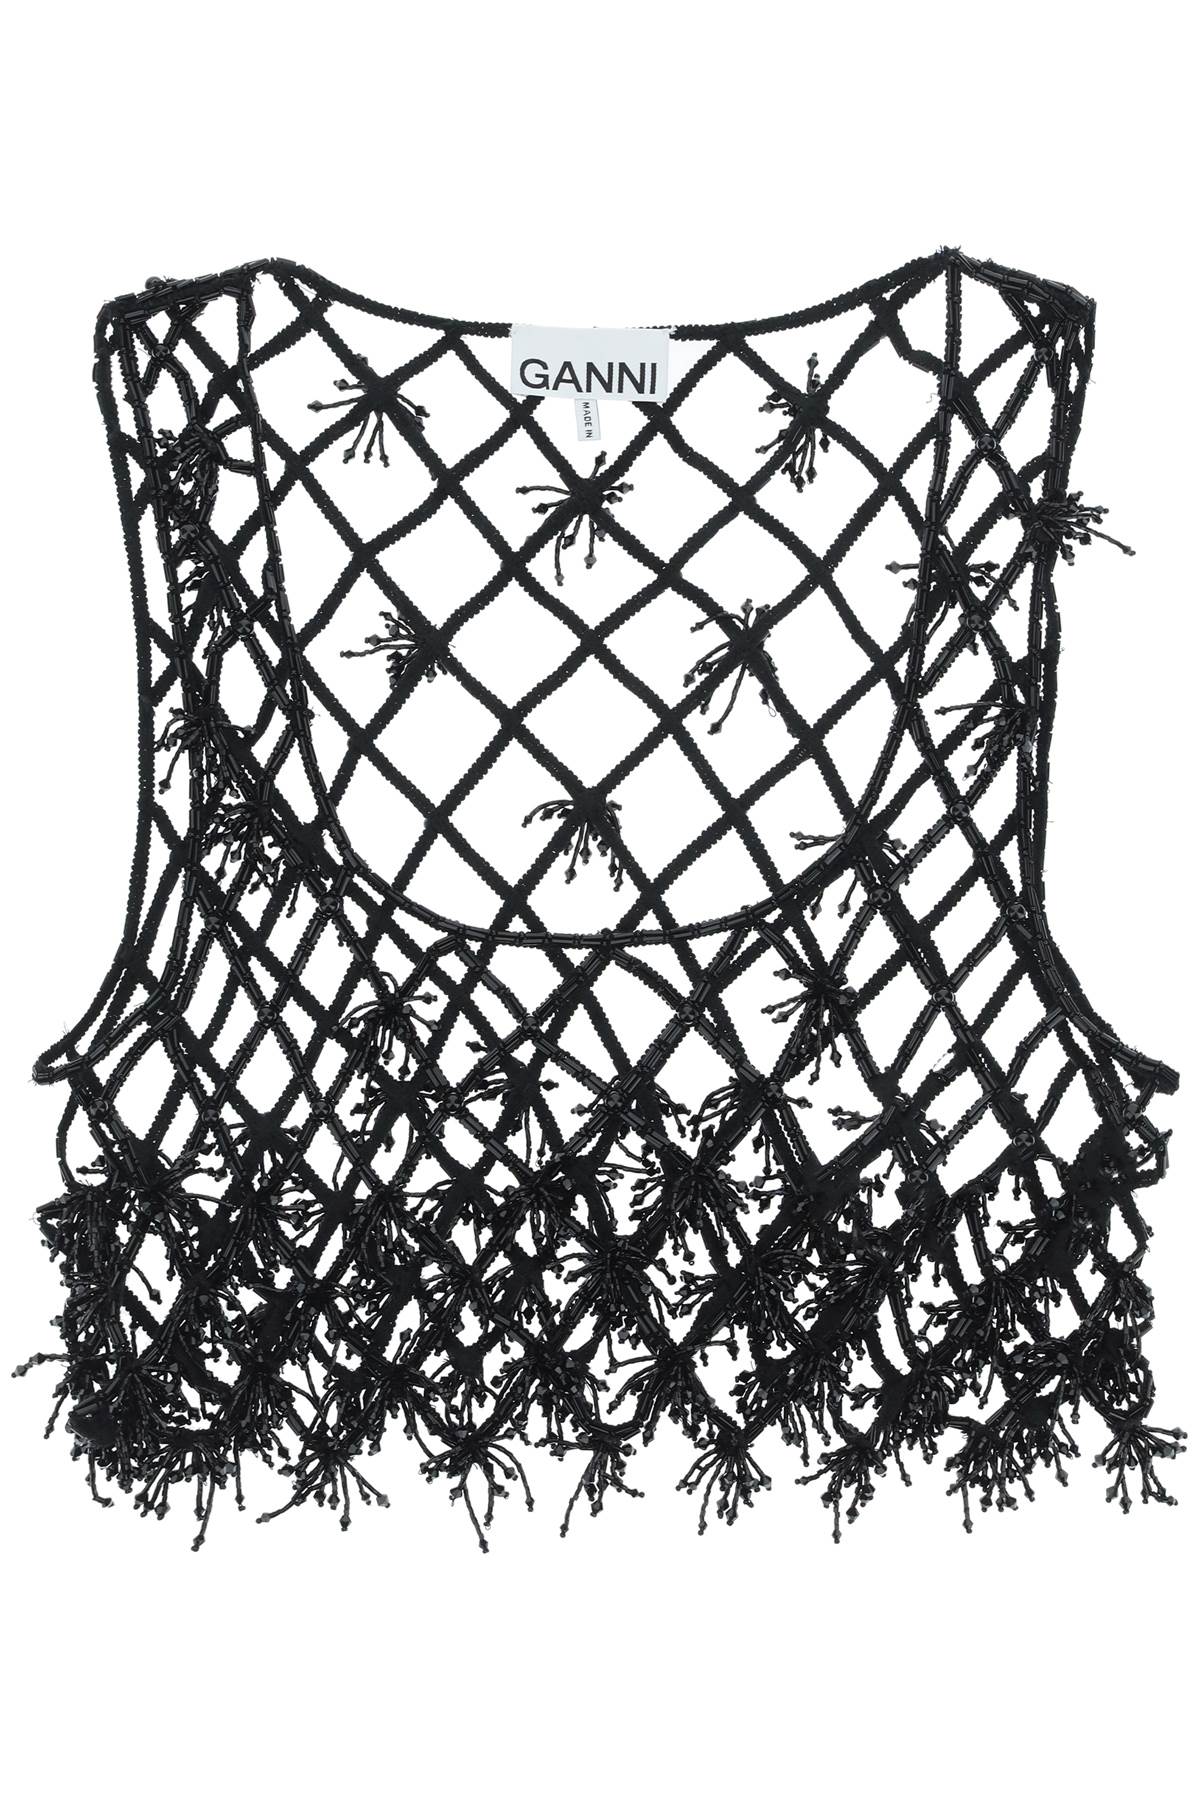 Ganni Beaded Netting Top